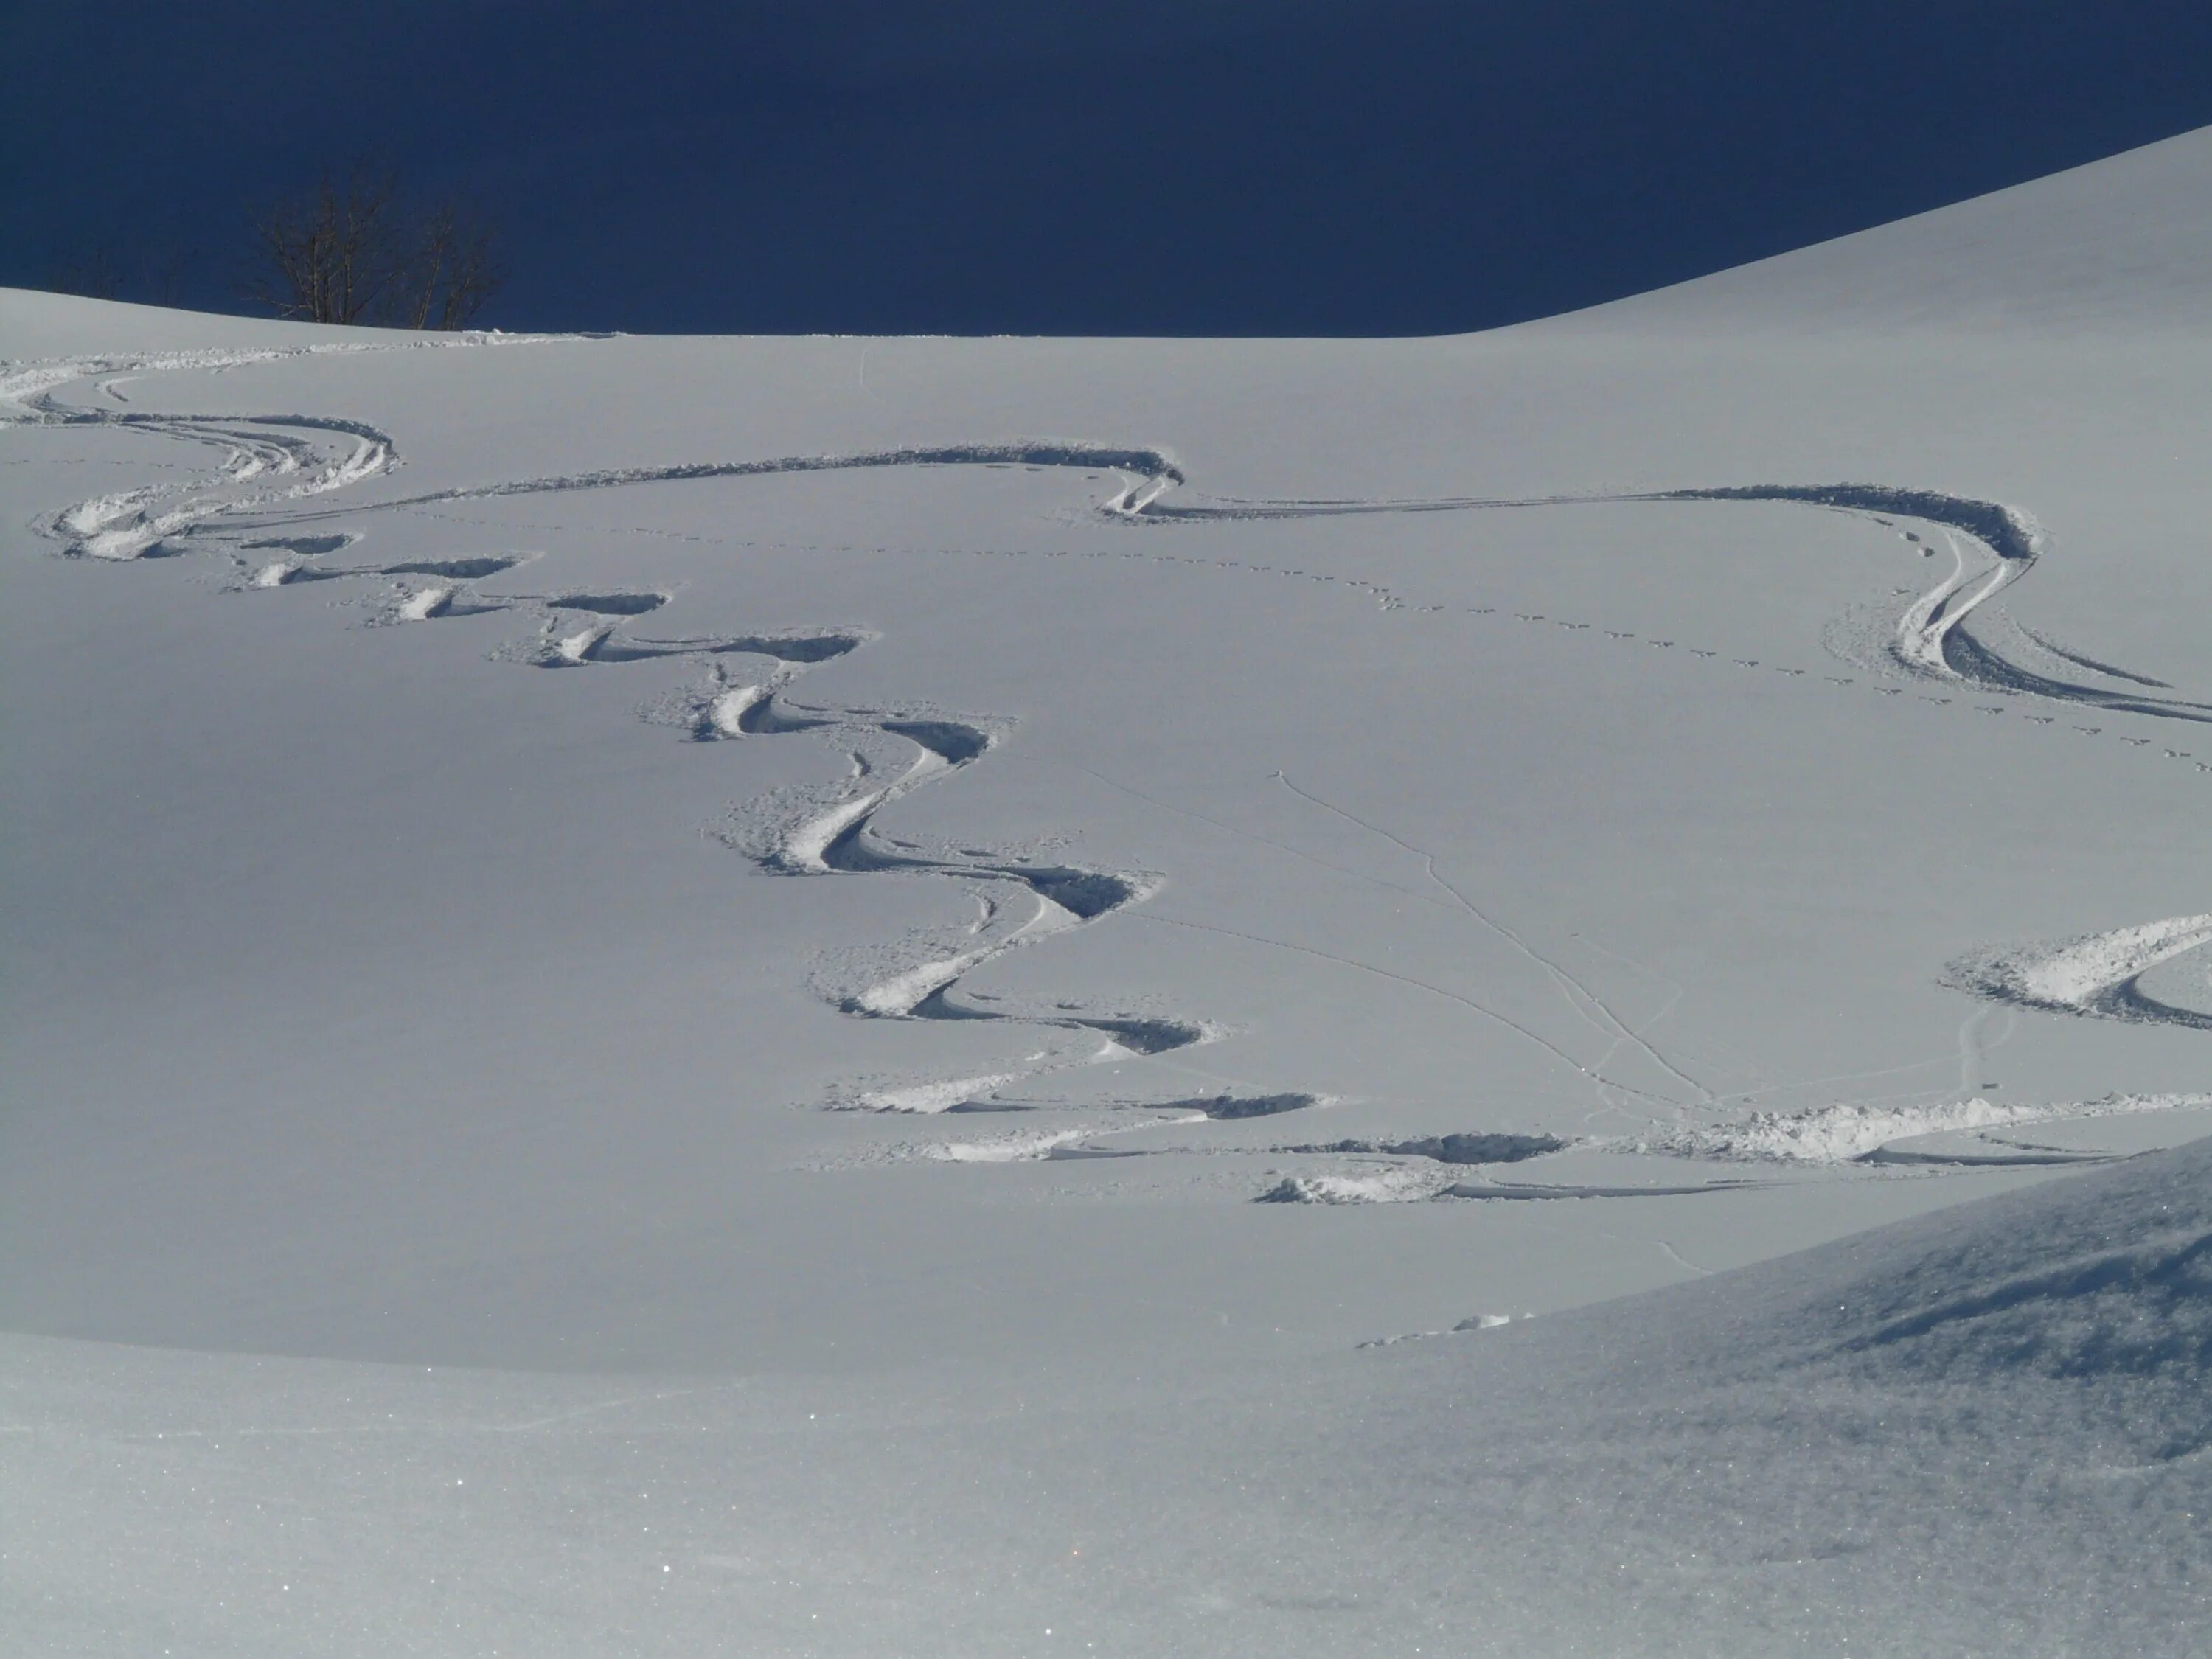 Лыжные следы на снегу. Следы от лыж на снегу. Лыжный след. След горных лыж. Ski tracks